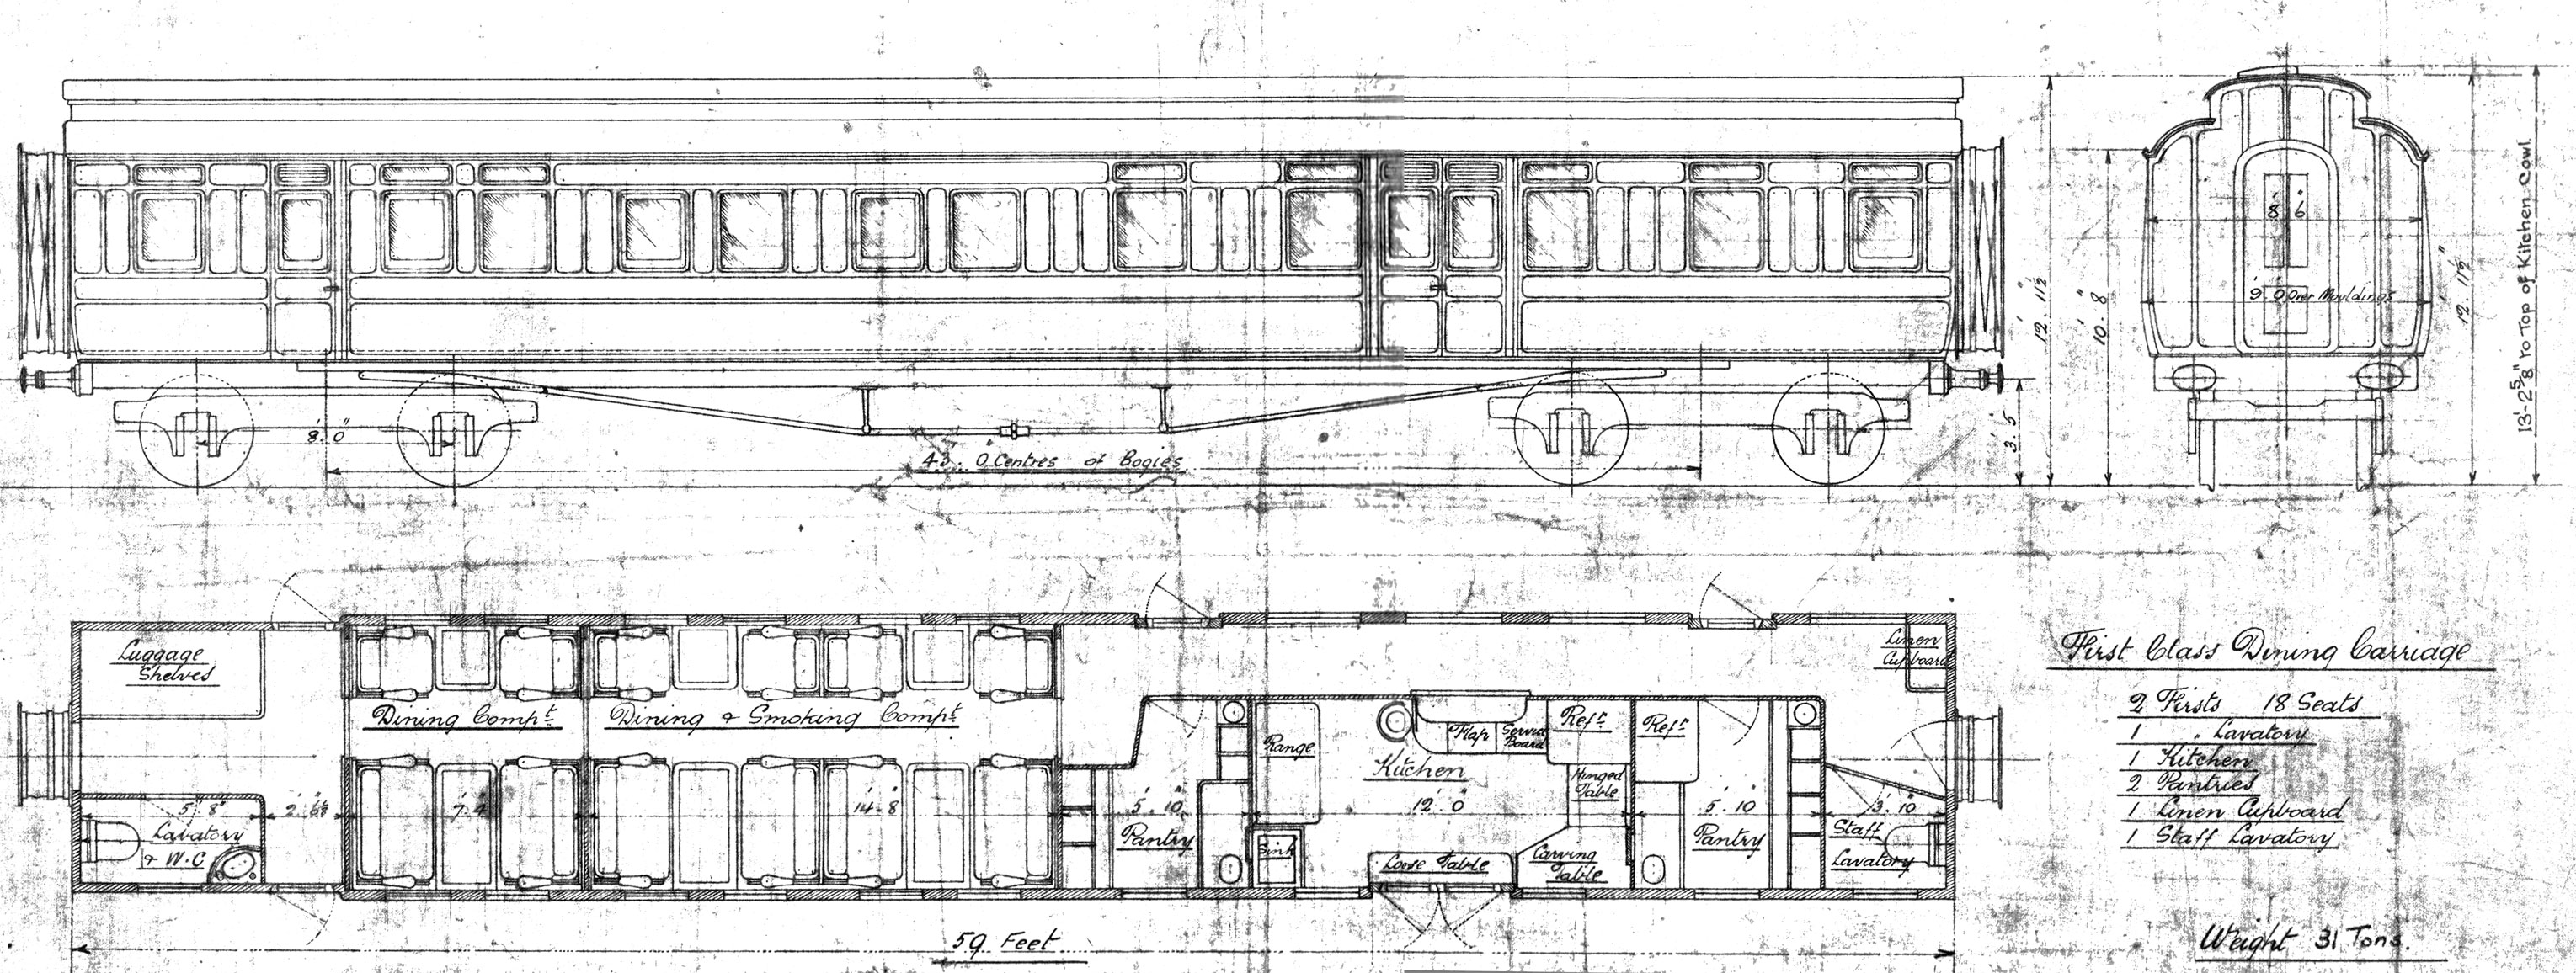 Diagram of Midland Railway D436 Coach